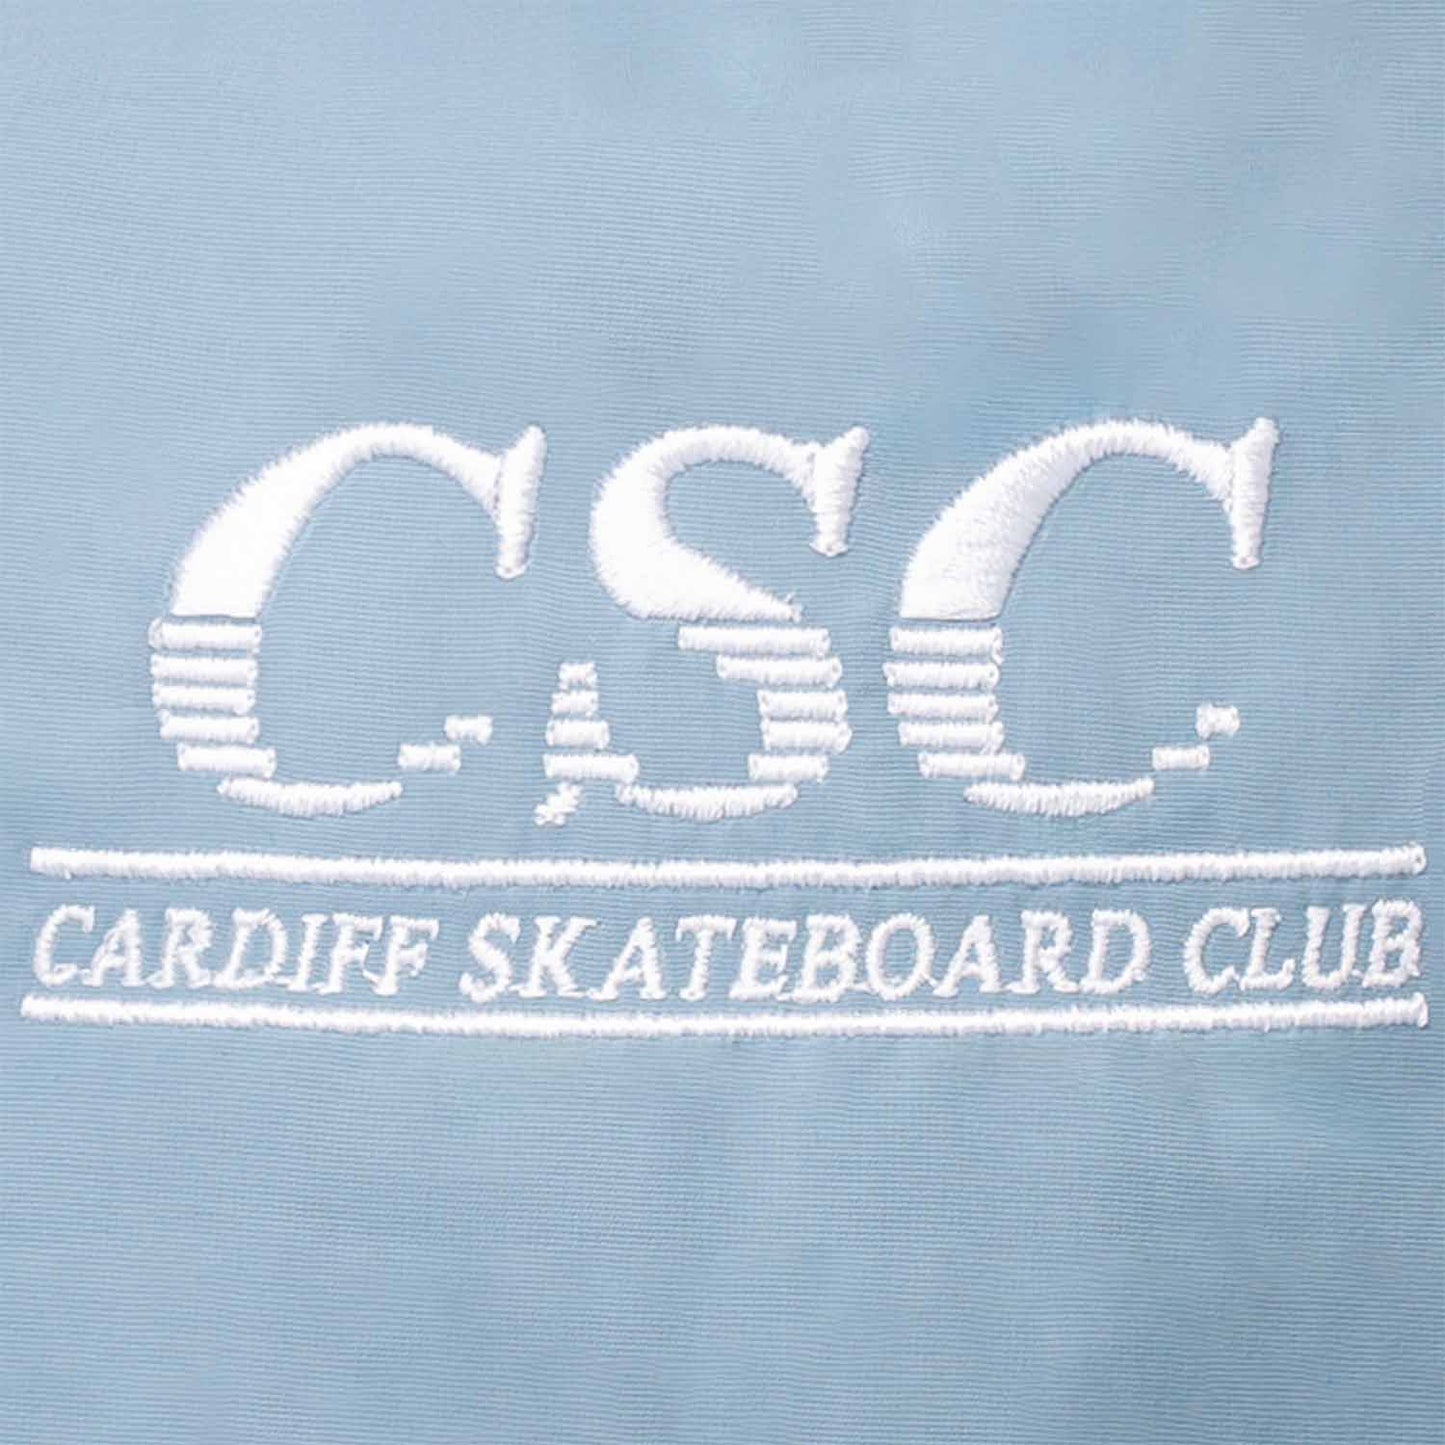 CSC 'Corp' Snapback Cap (Slate)